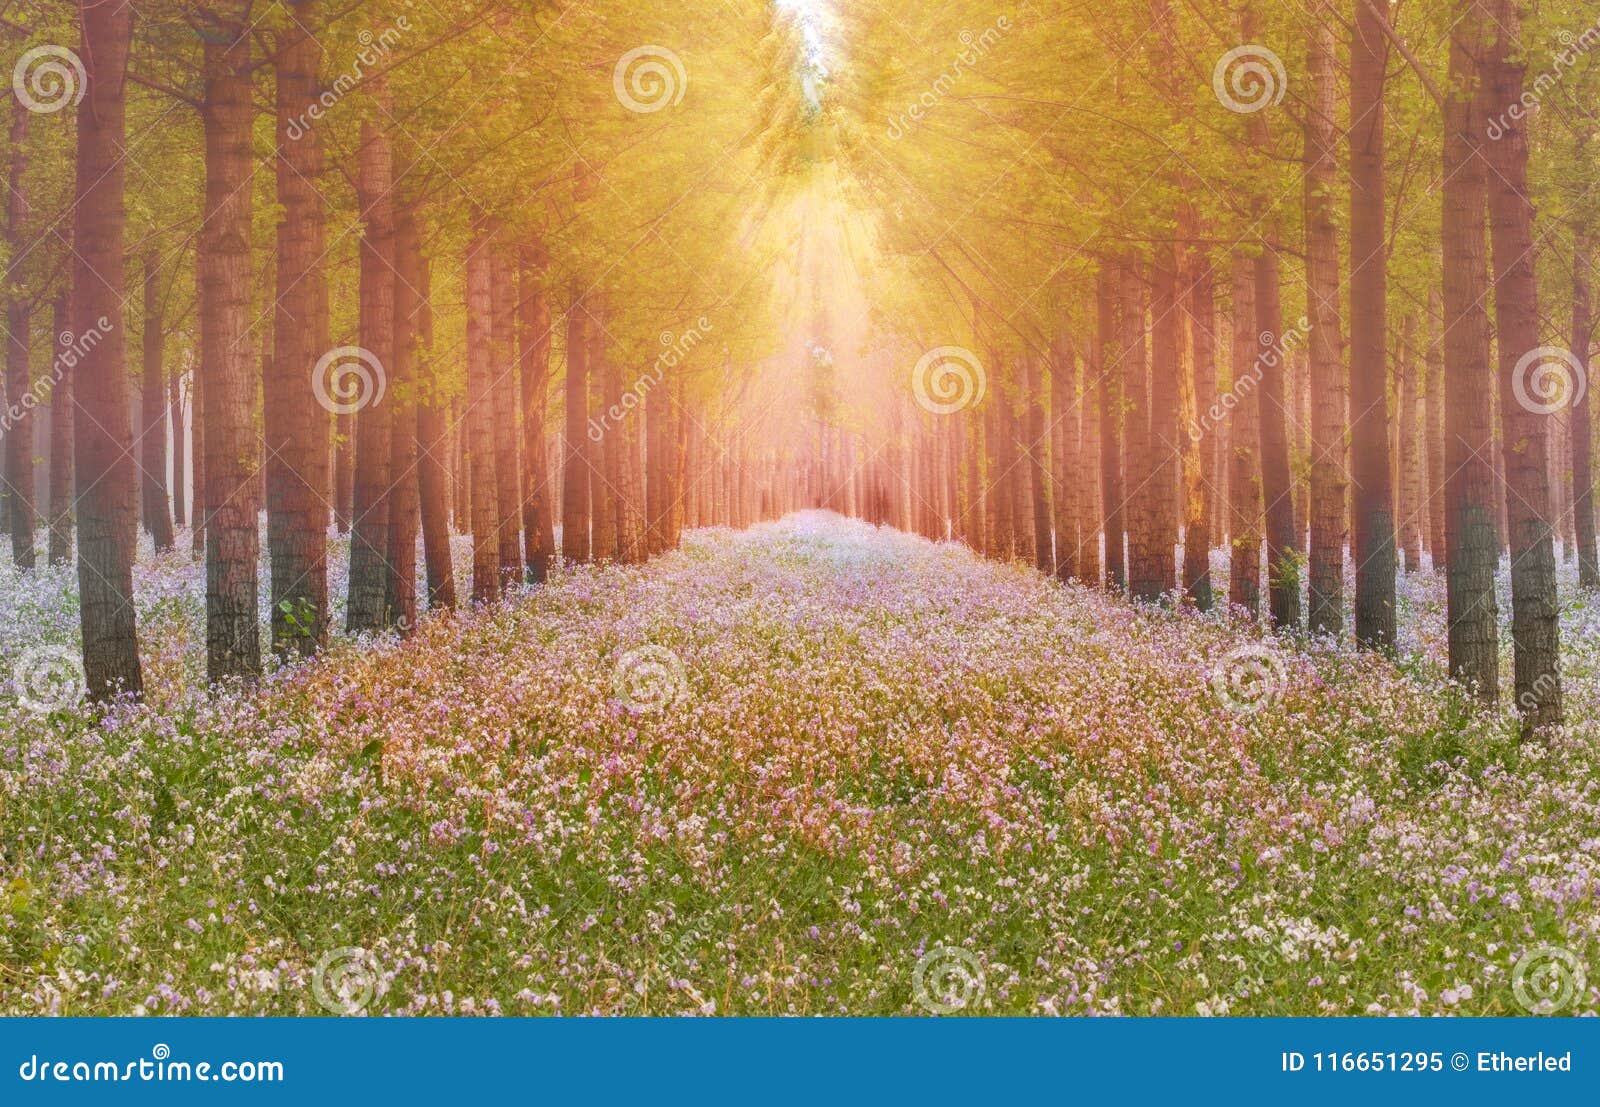 dreamlike forest in spring